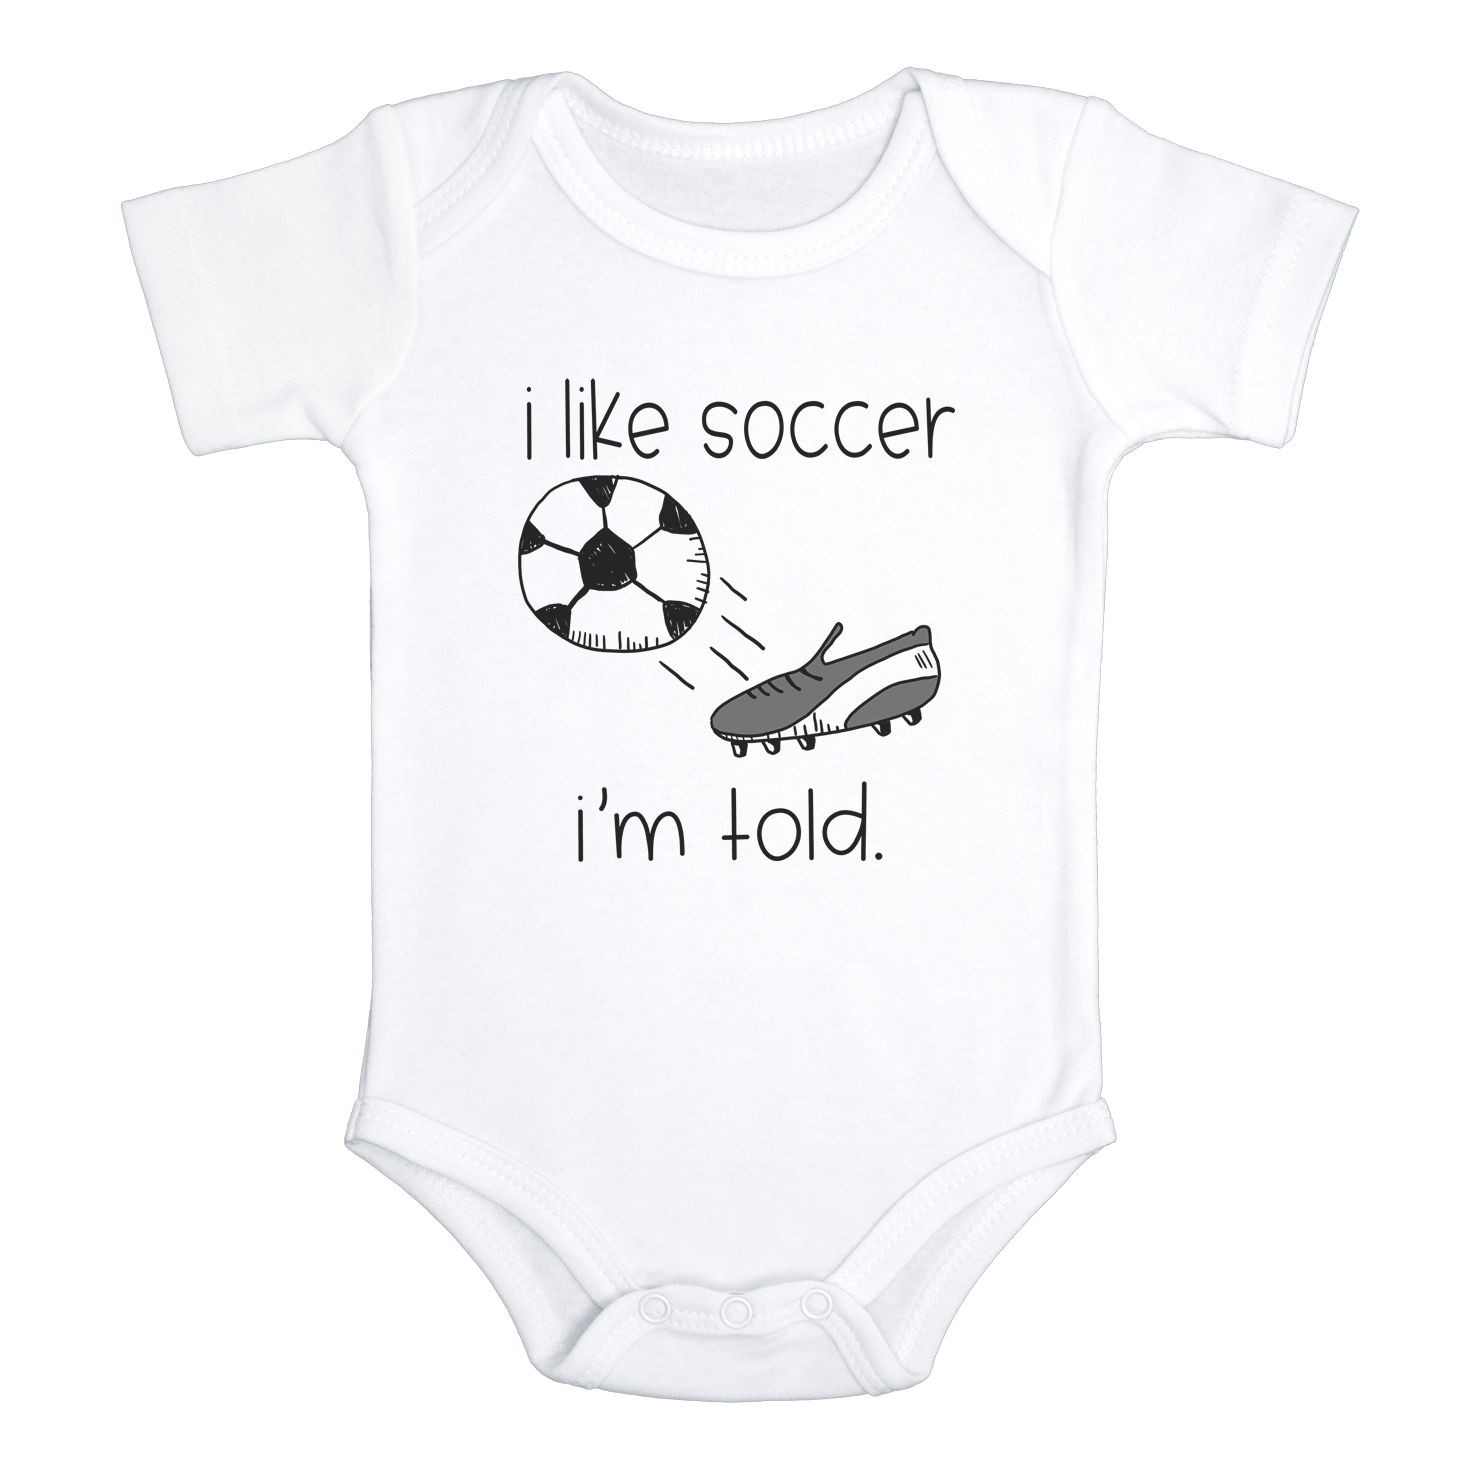 I LIKE SOCCER I'M TOLD Funny Baby Bodysuit Cute Soccer Onesie White - HappyAddition